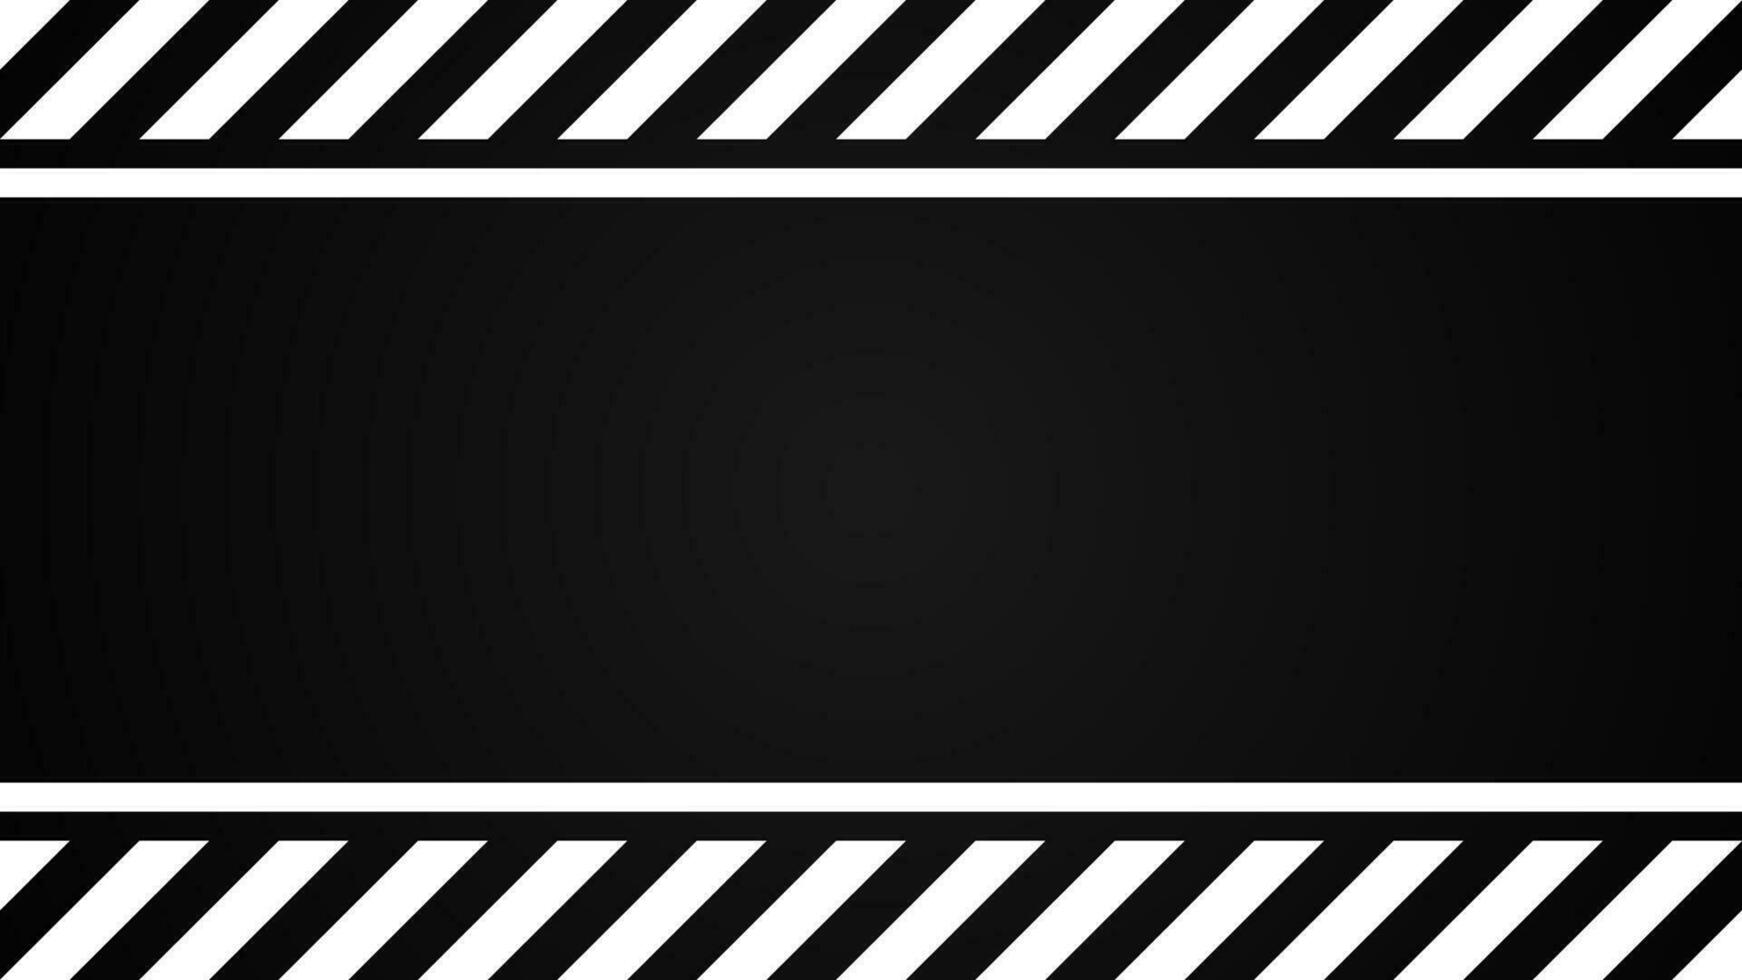 negro y blanco precaución sencillo vector fondo de pantalla antecedentes